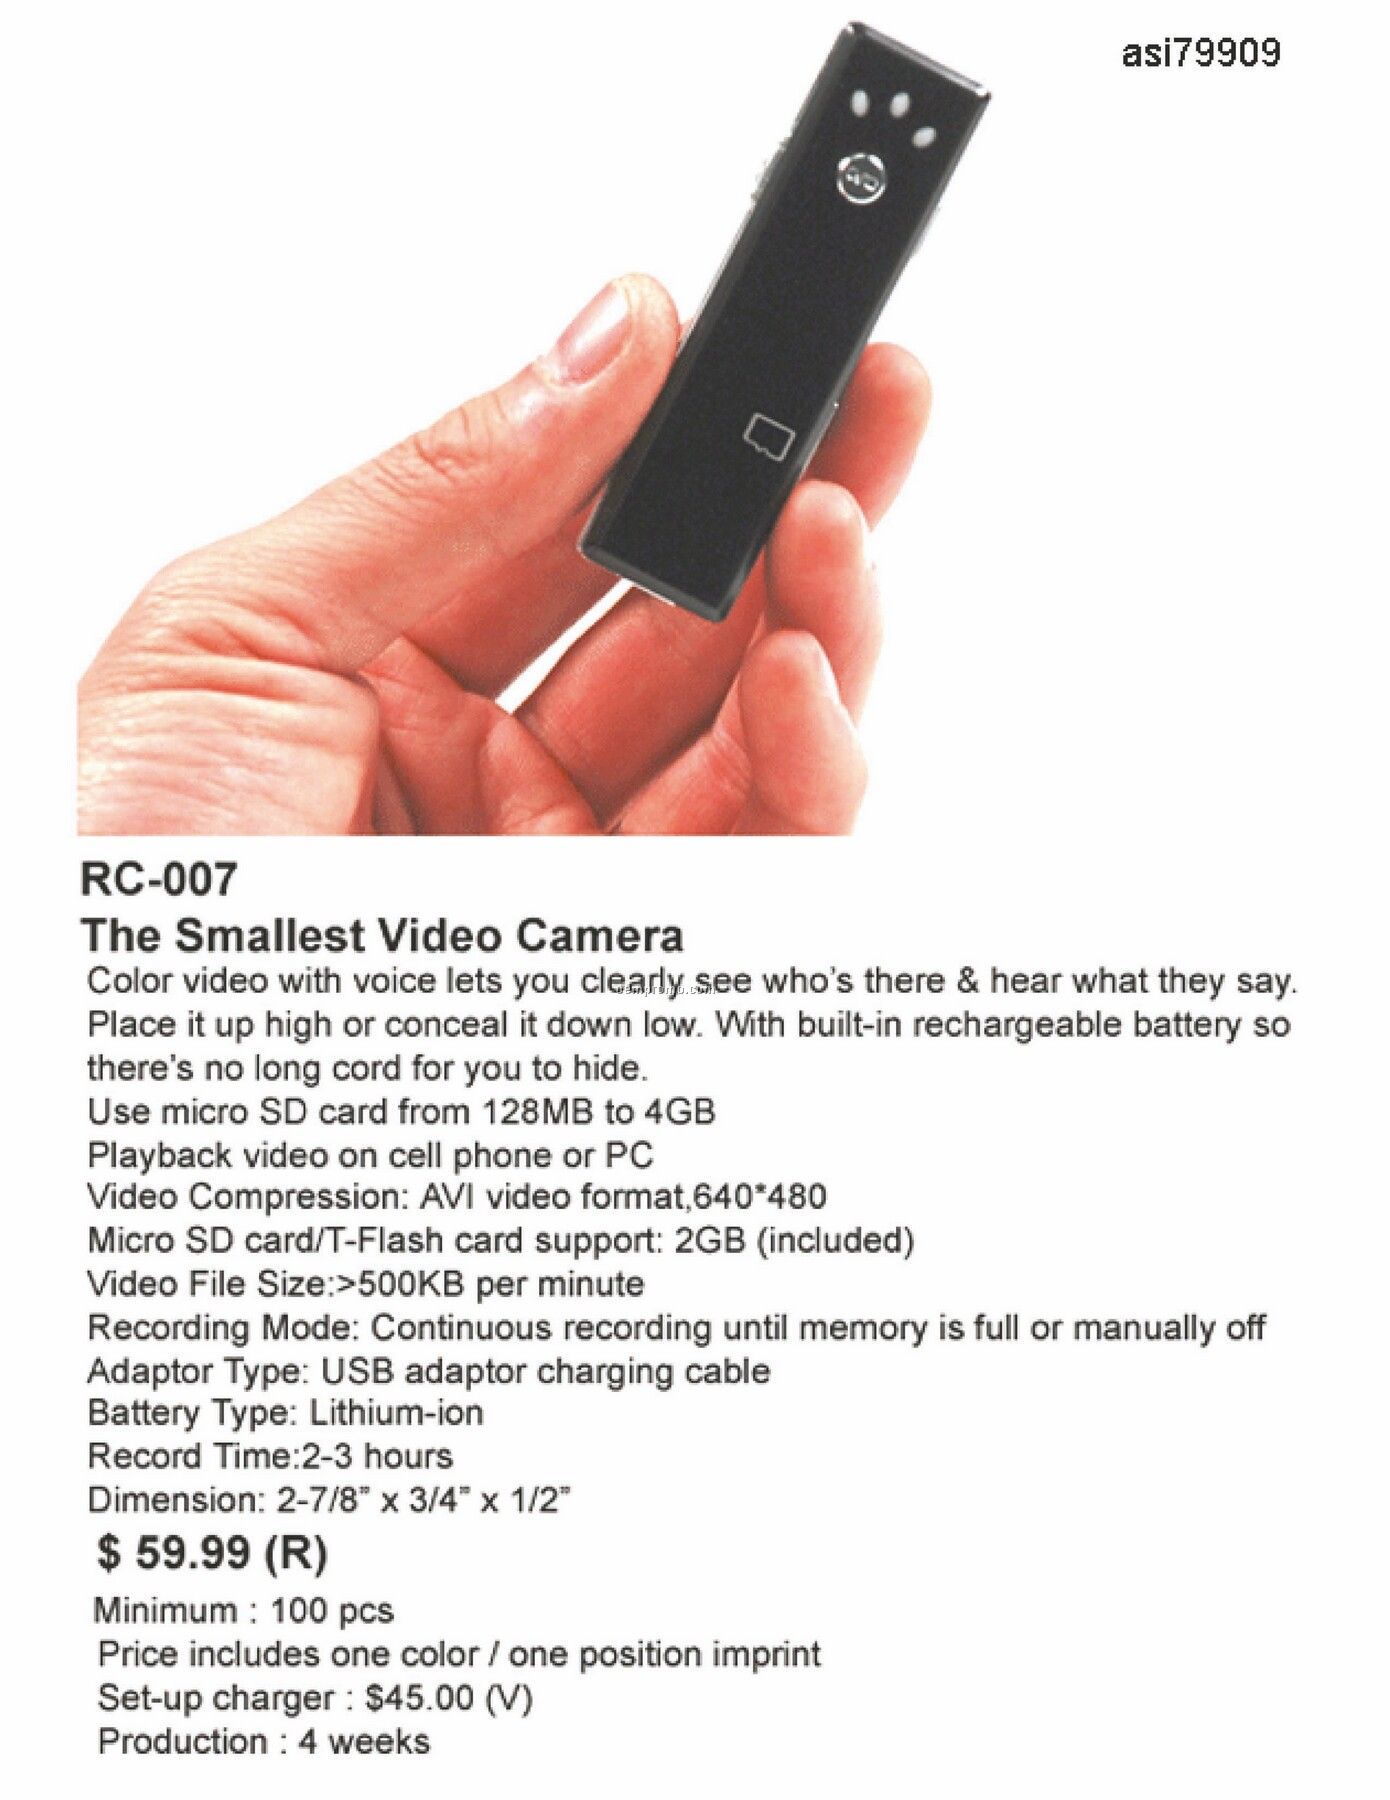 The Smallest Video Camera